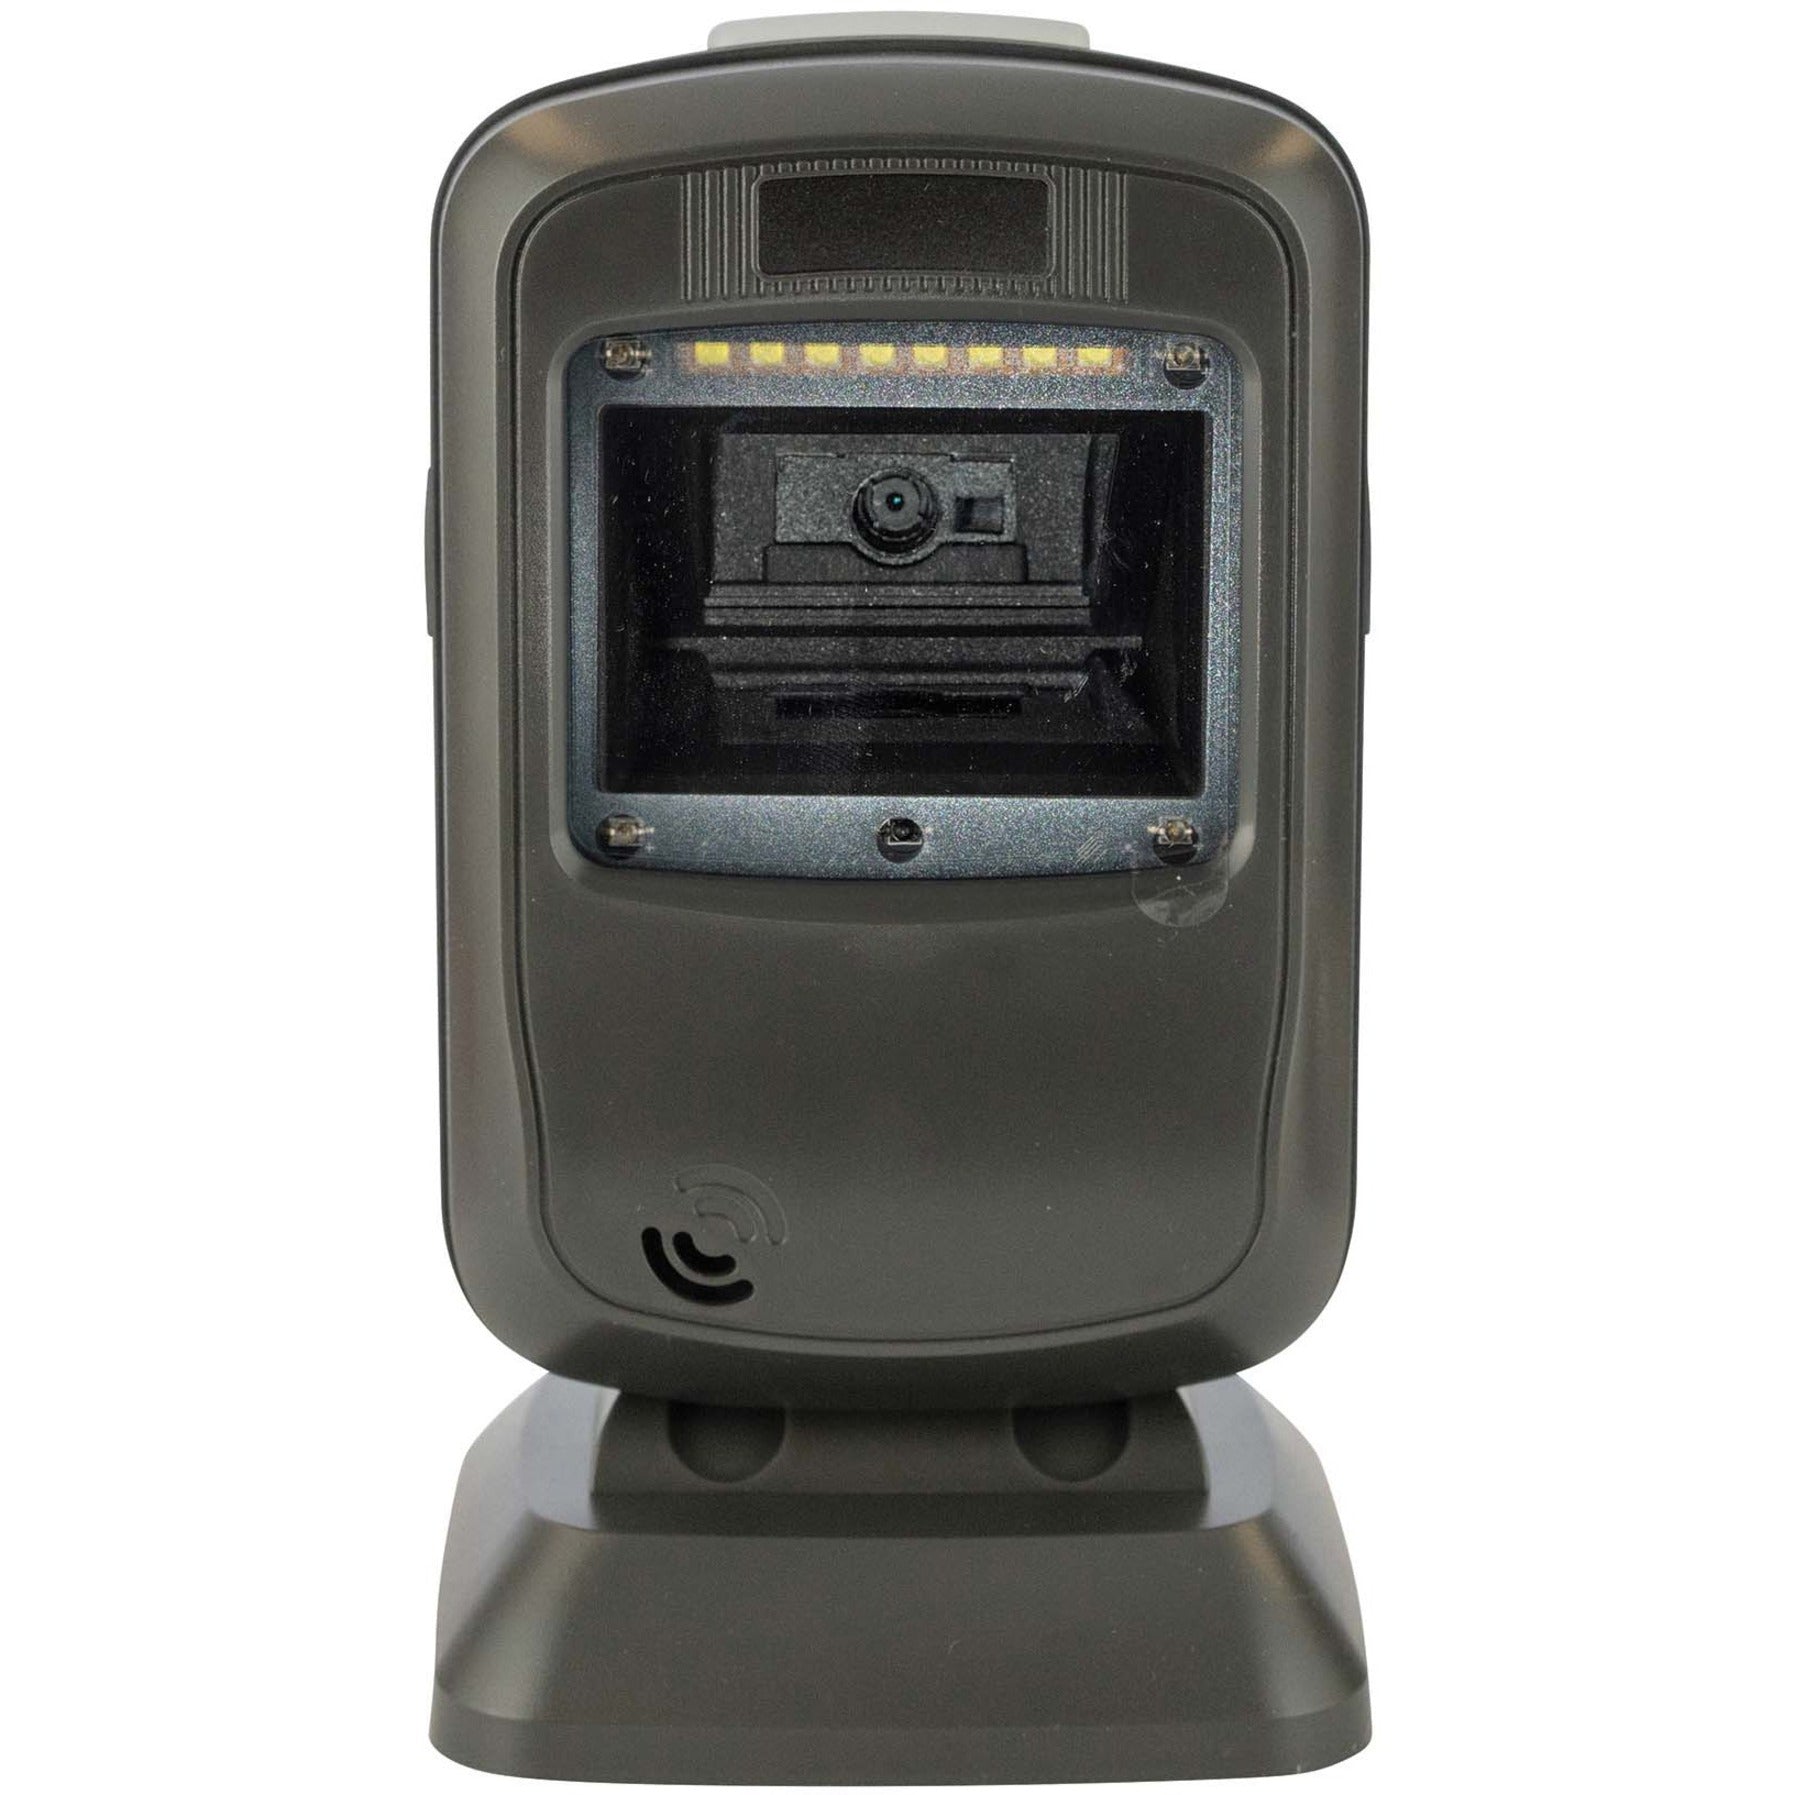 Star Micronics 37950440 Desktop Barcode Scanner, Wireless Imager, 1D/2D Scanning Capability